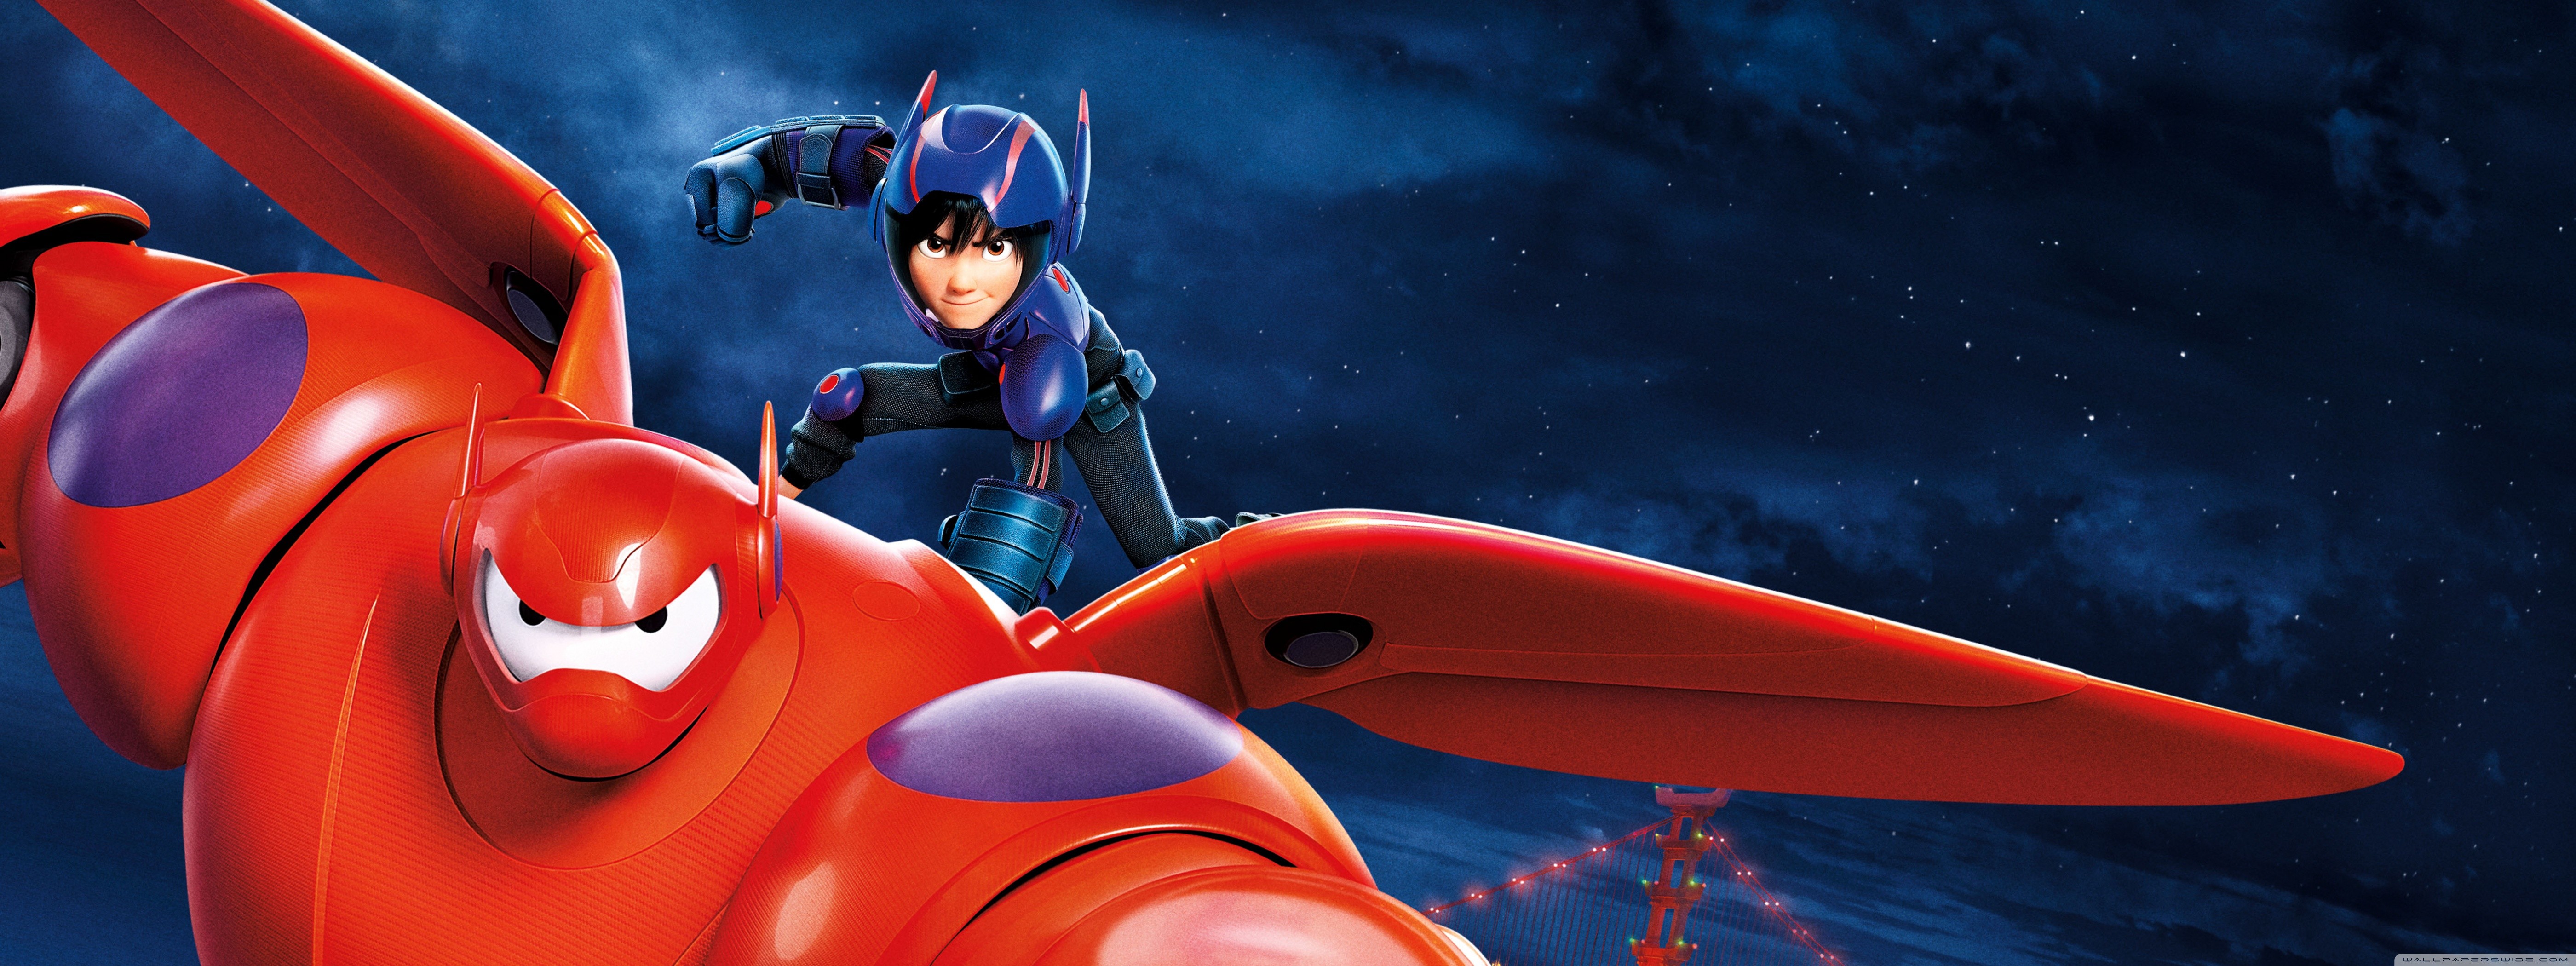 General 5600x2100 movies Pixar Animation Studios Disney Baymax (Big Hero 6) animated movies 2014 (Year)